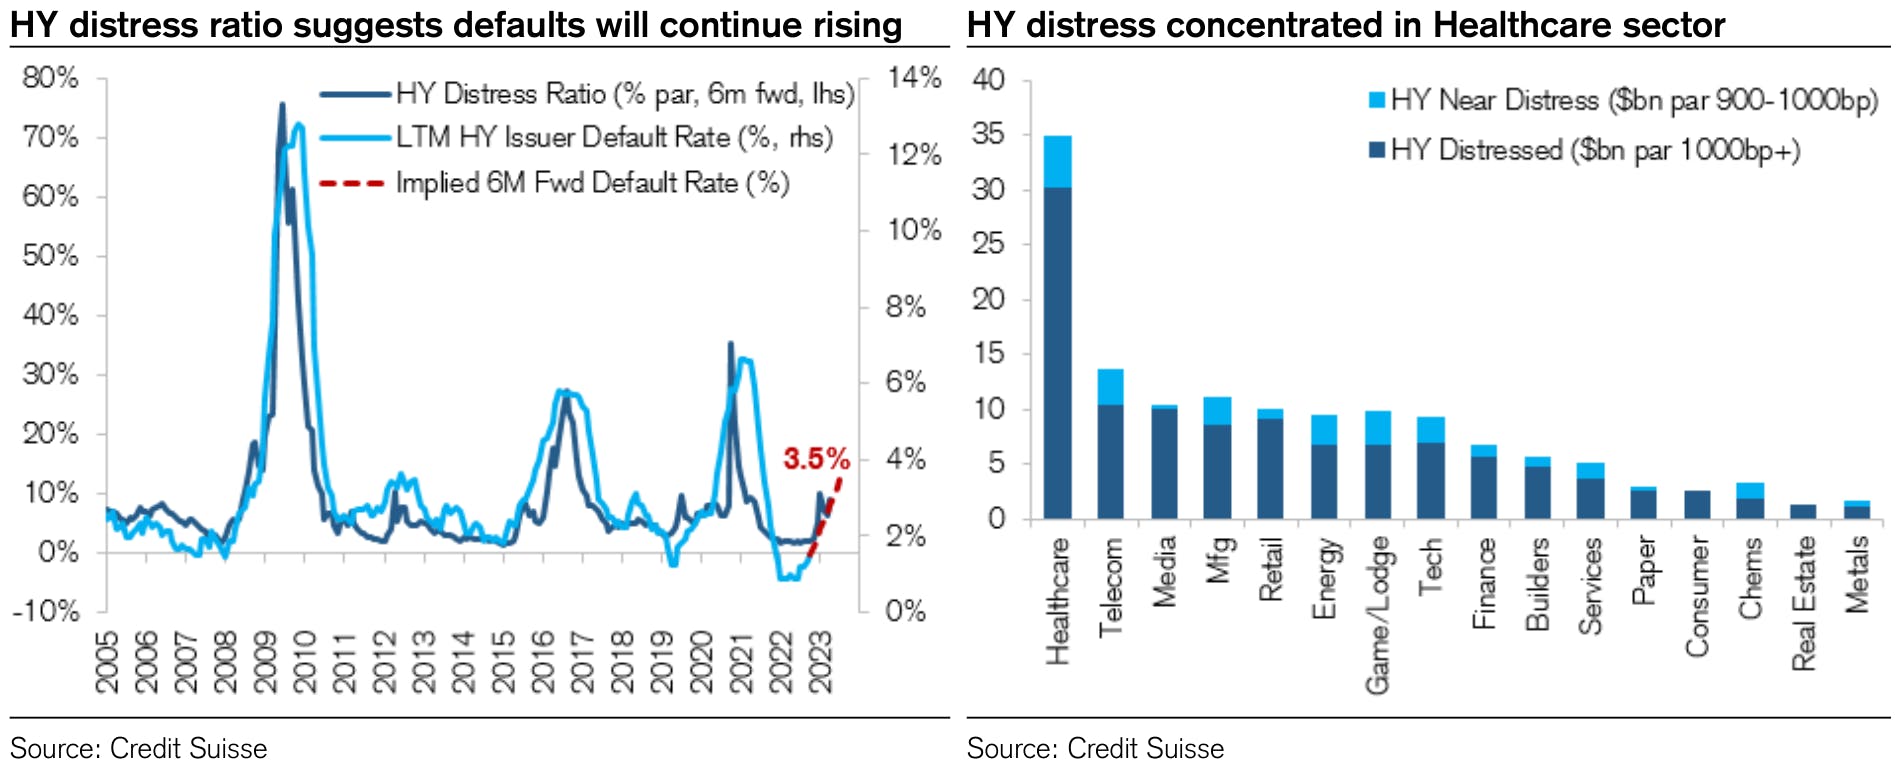 USD HY Distress ratio | Source: Credit Suisse